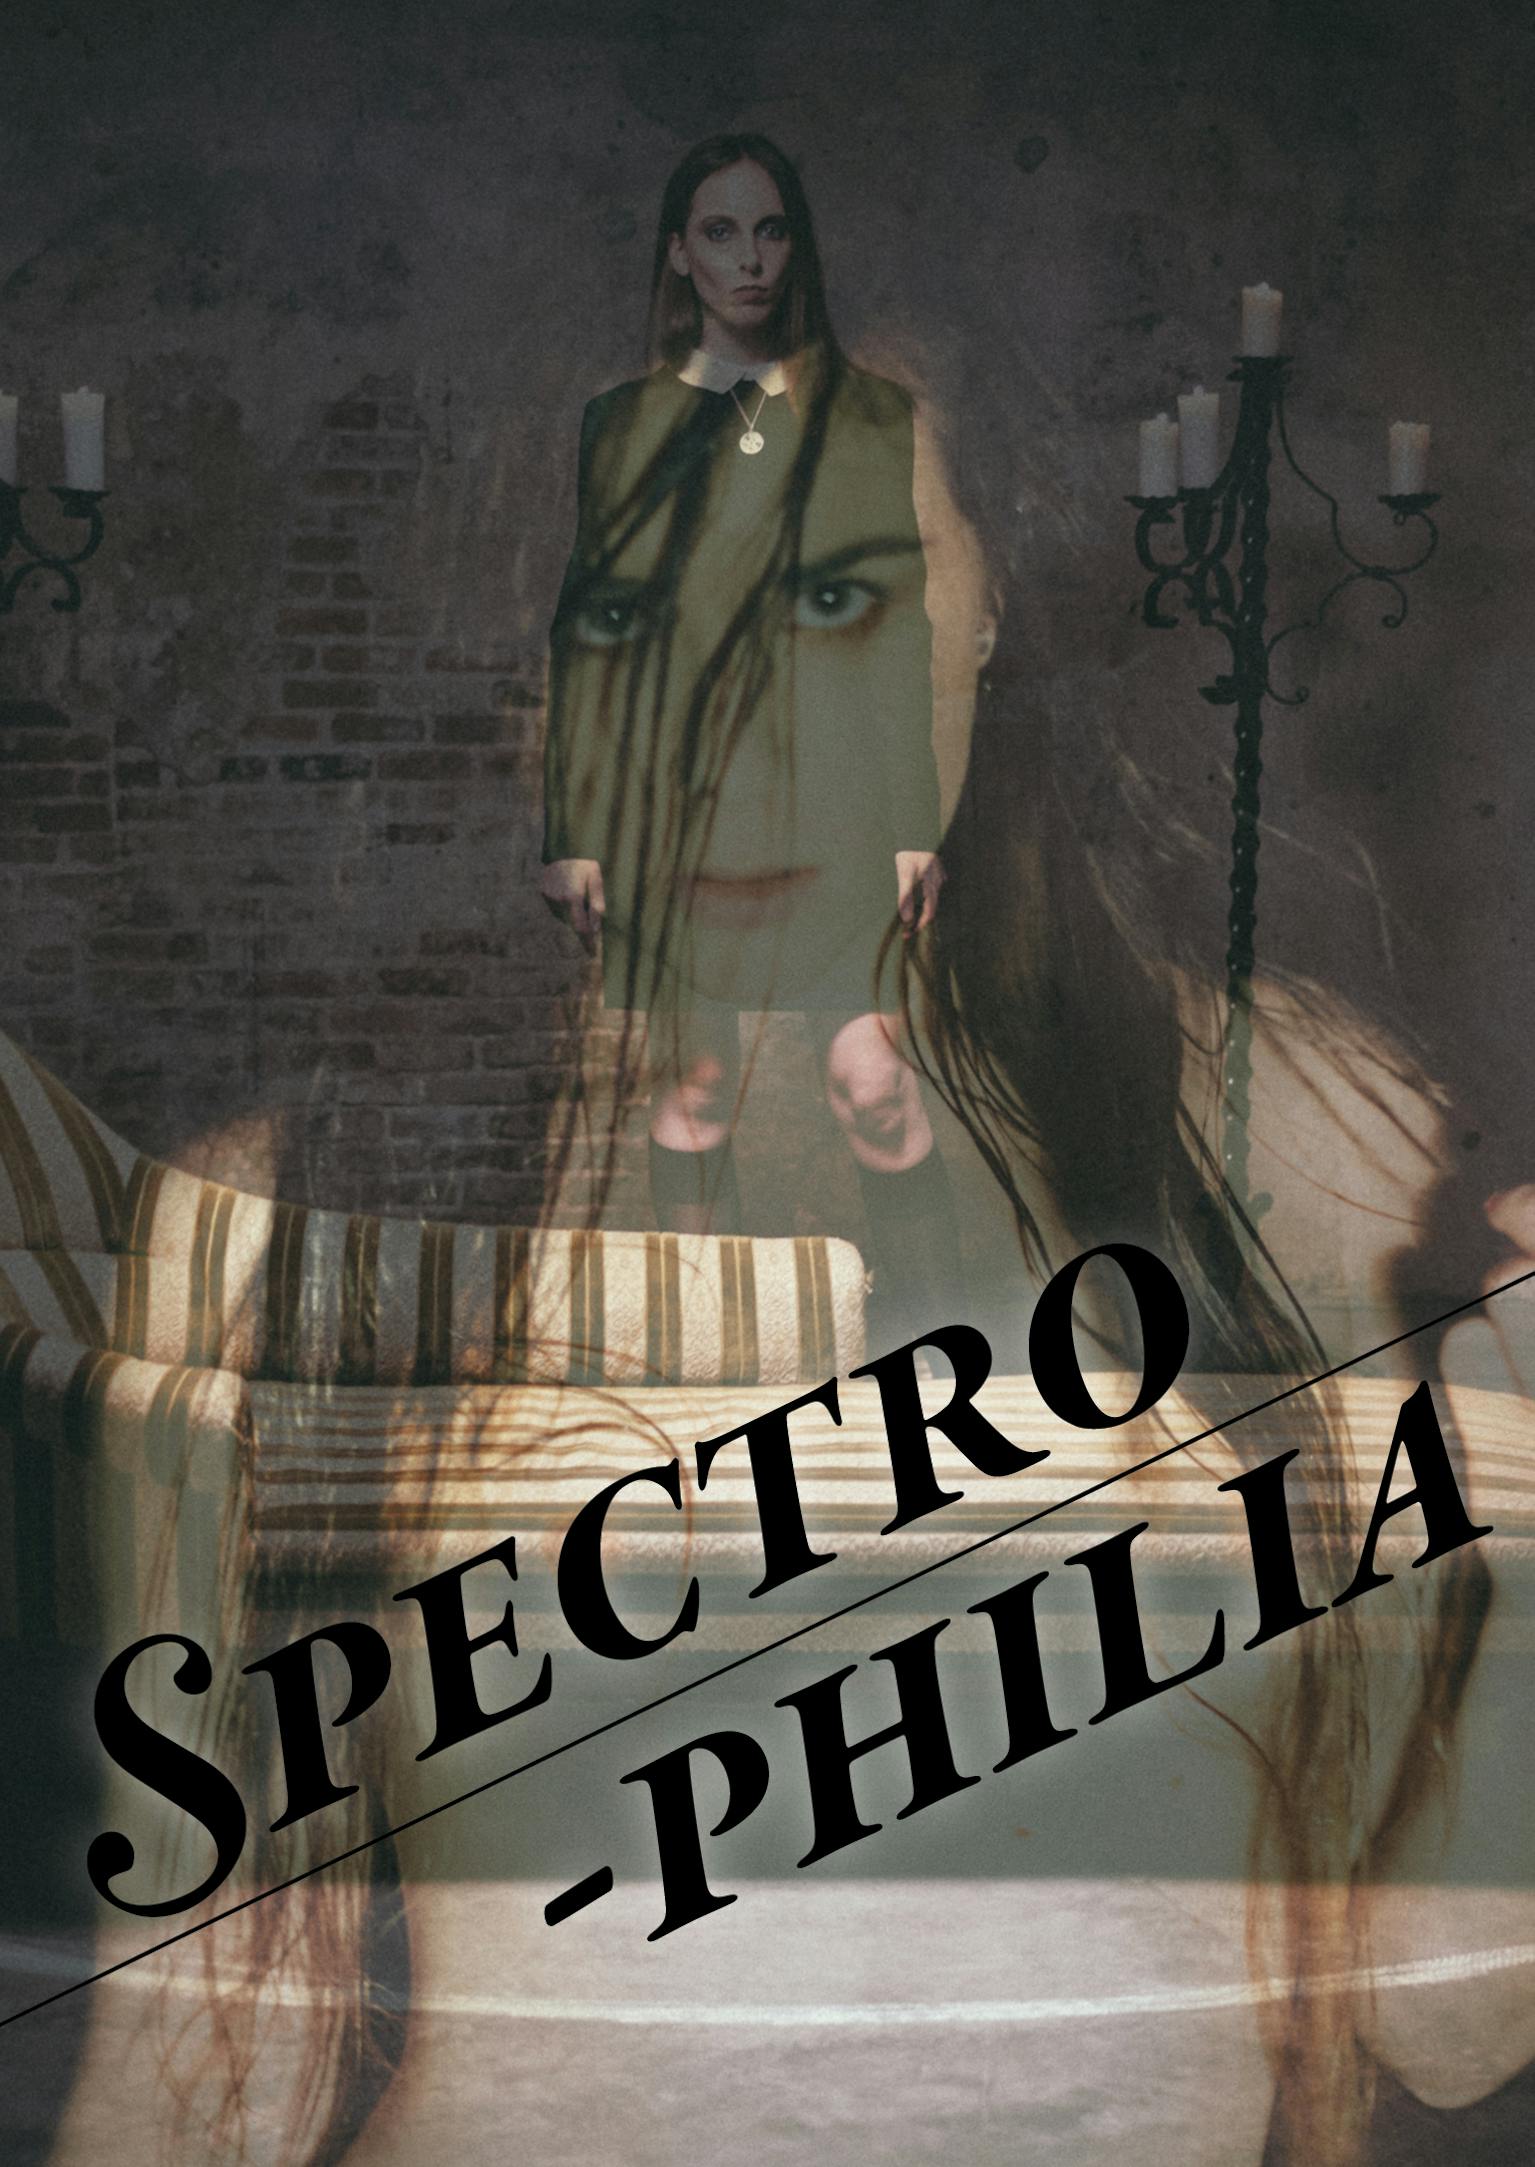 Spectrophilia